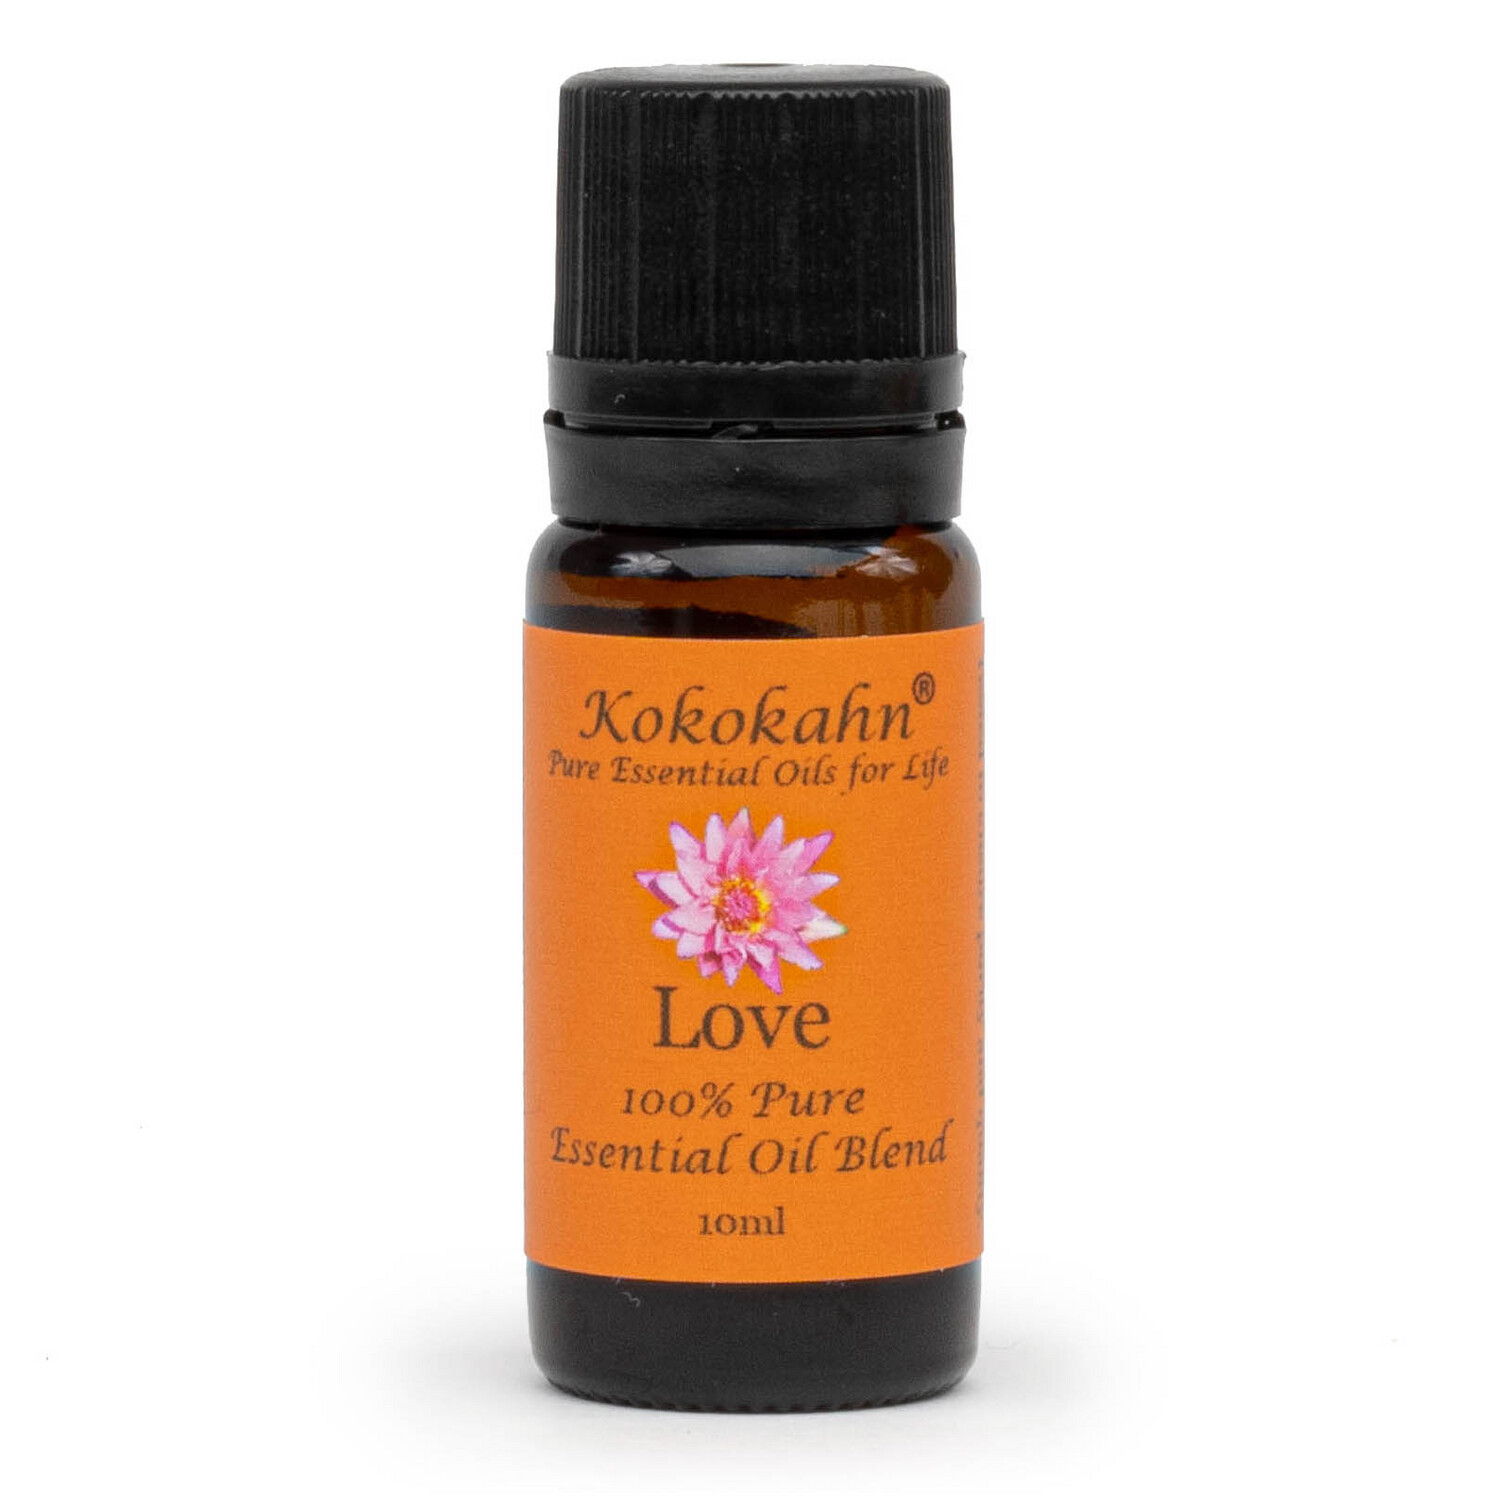 Love Essential Oil Blend | Kokokahn Pure Essential Oils